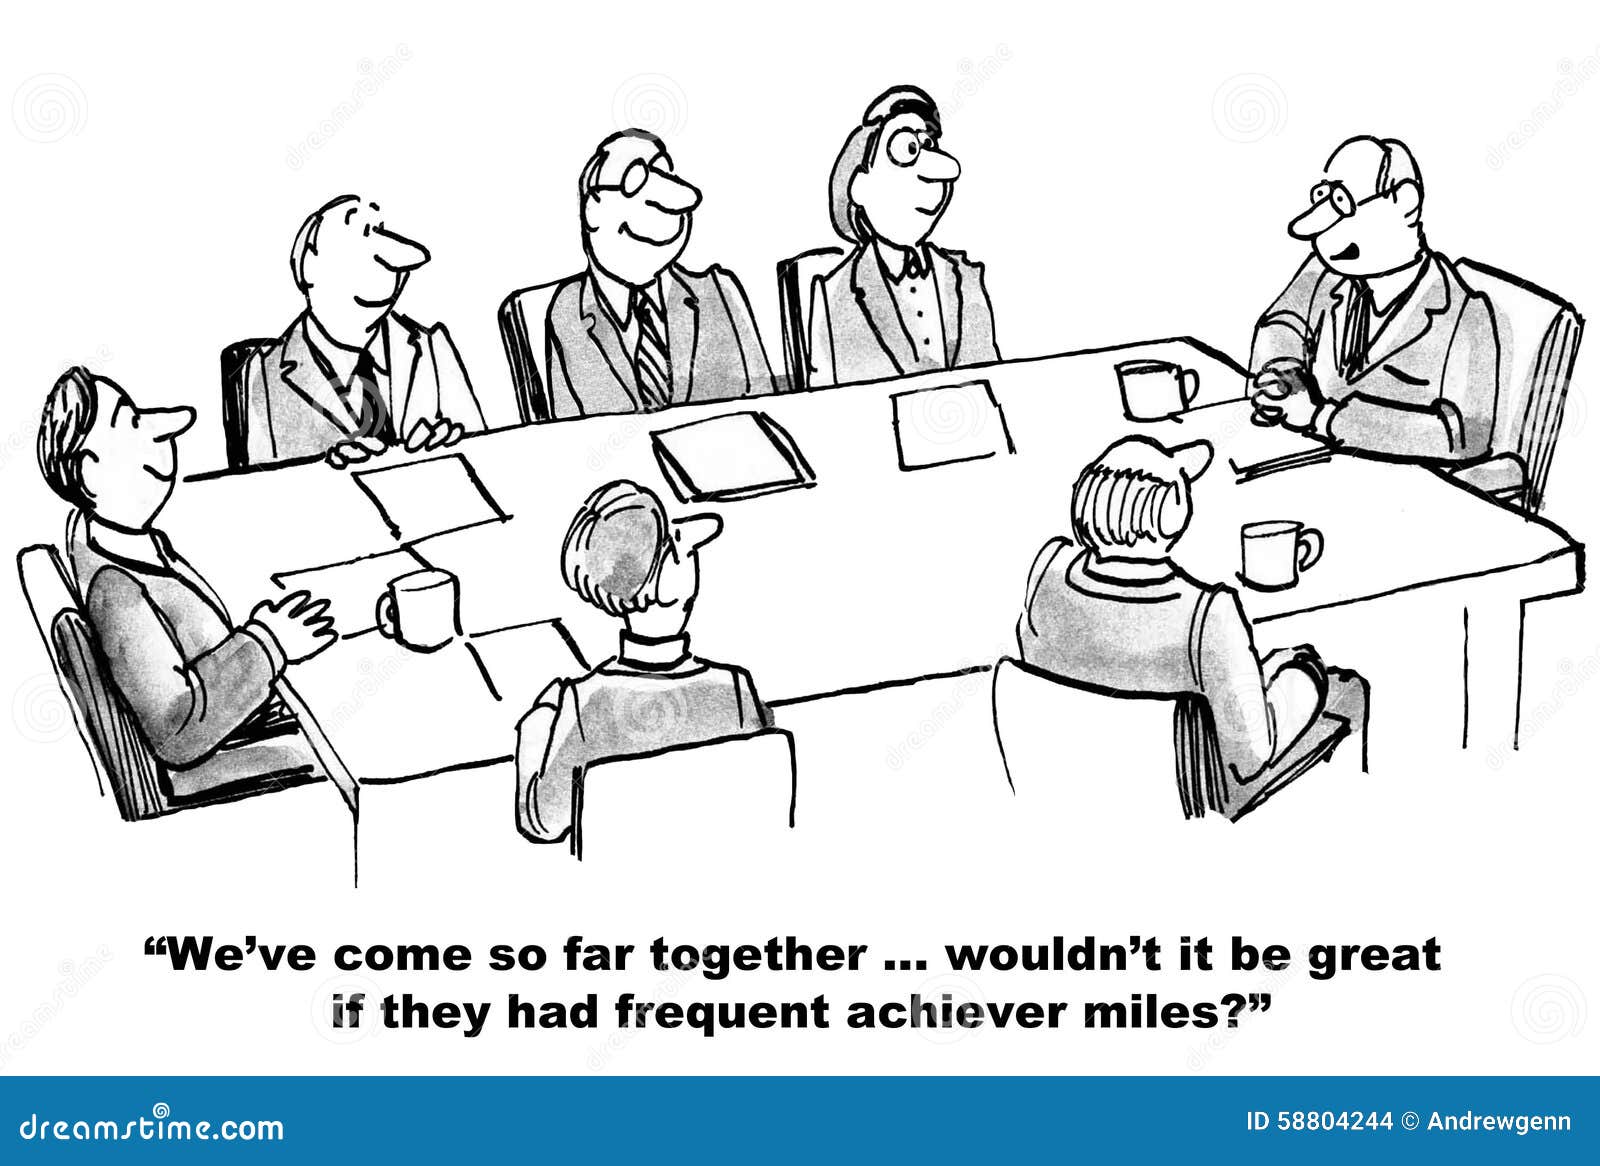 frequent achiever miles